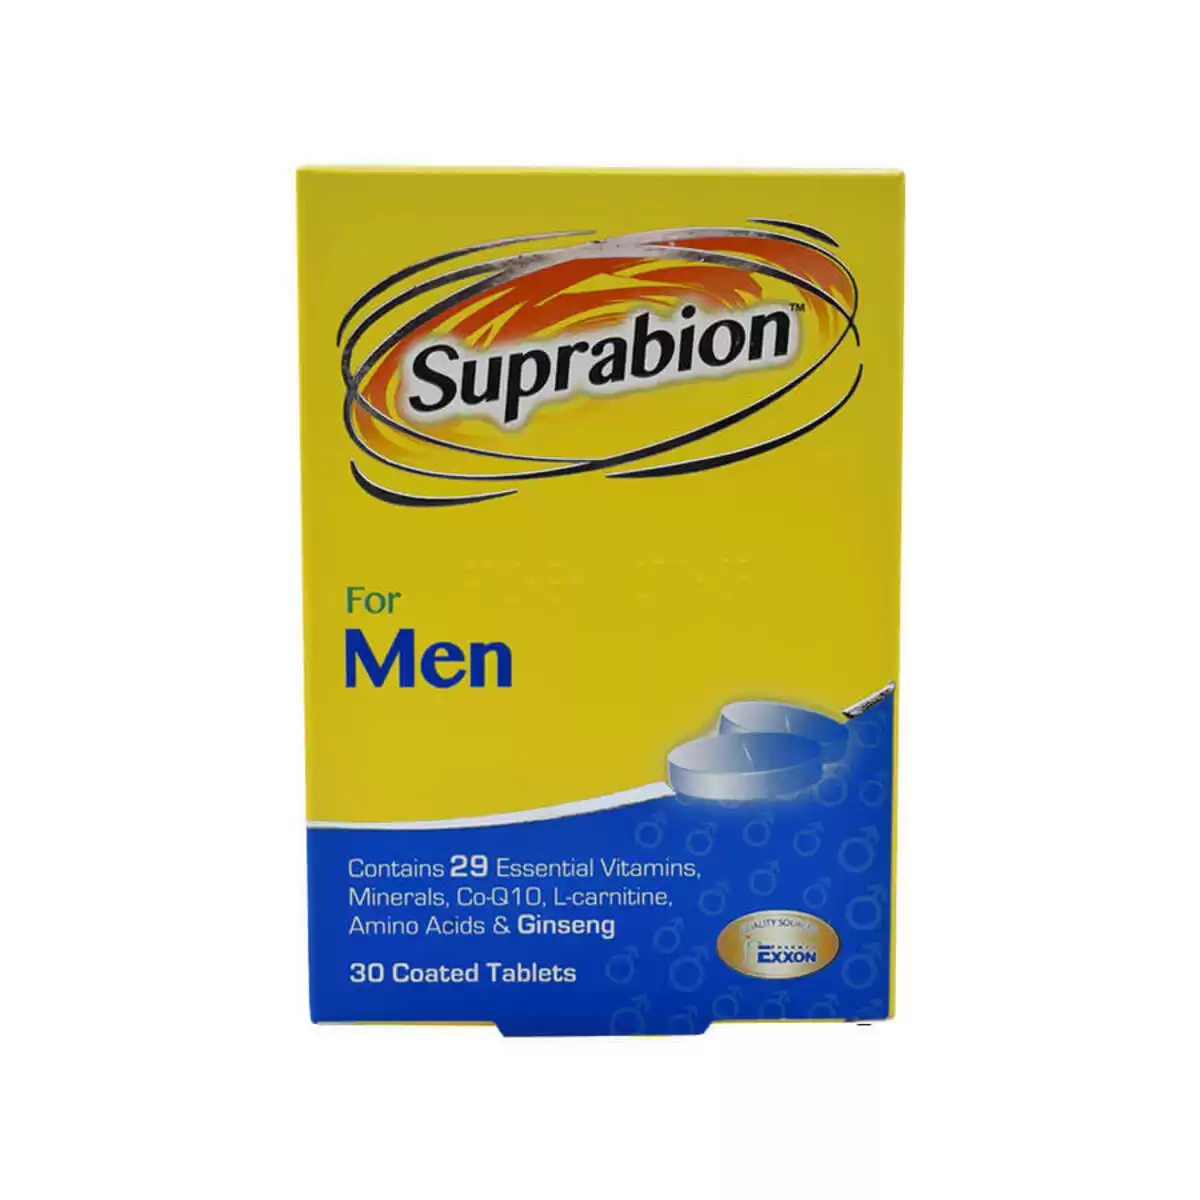 مولتی ویتامین فور من سوپرابیون | SUPRABION FOR MEN